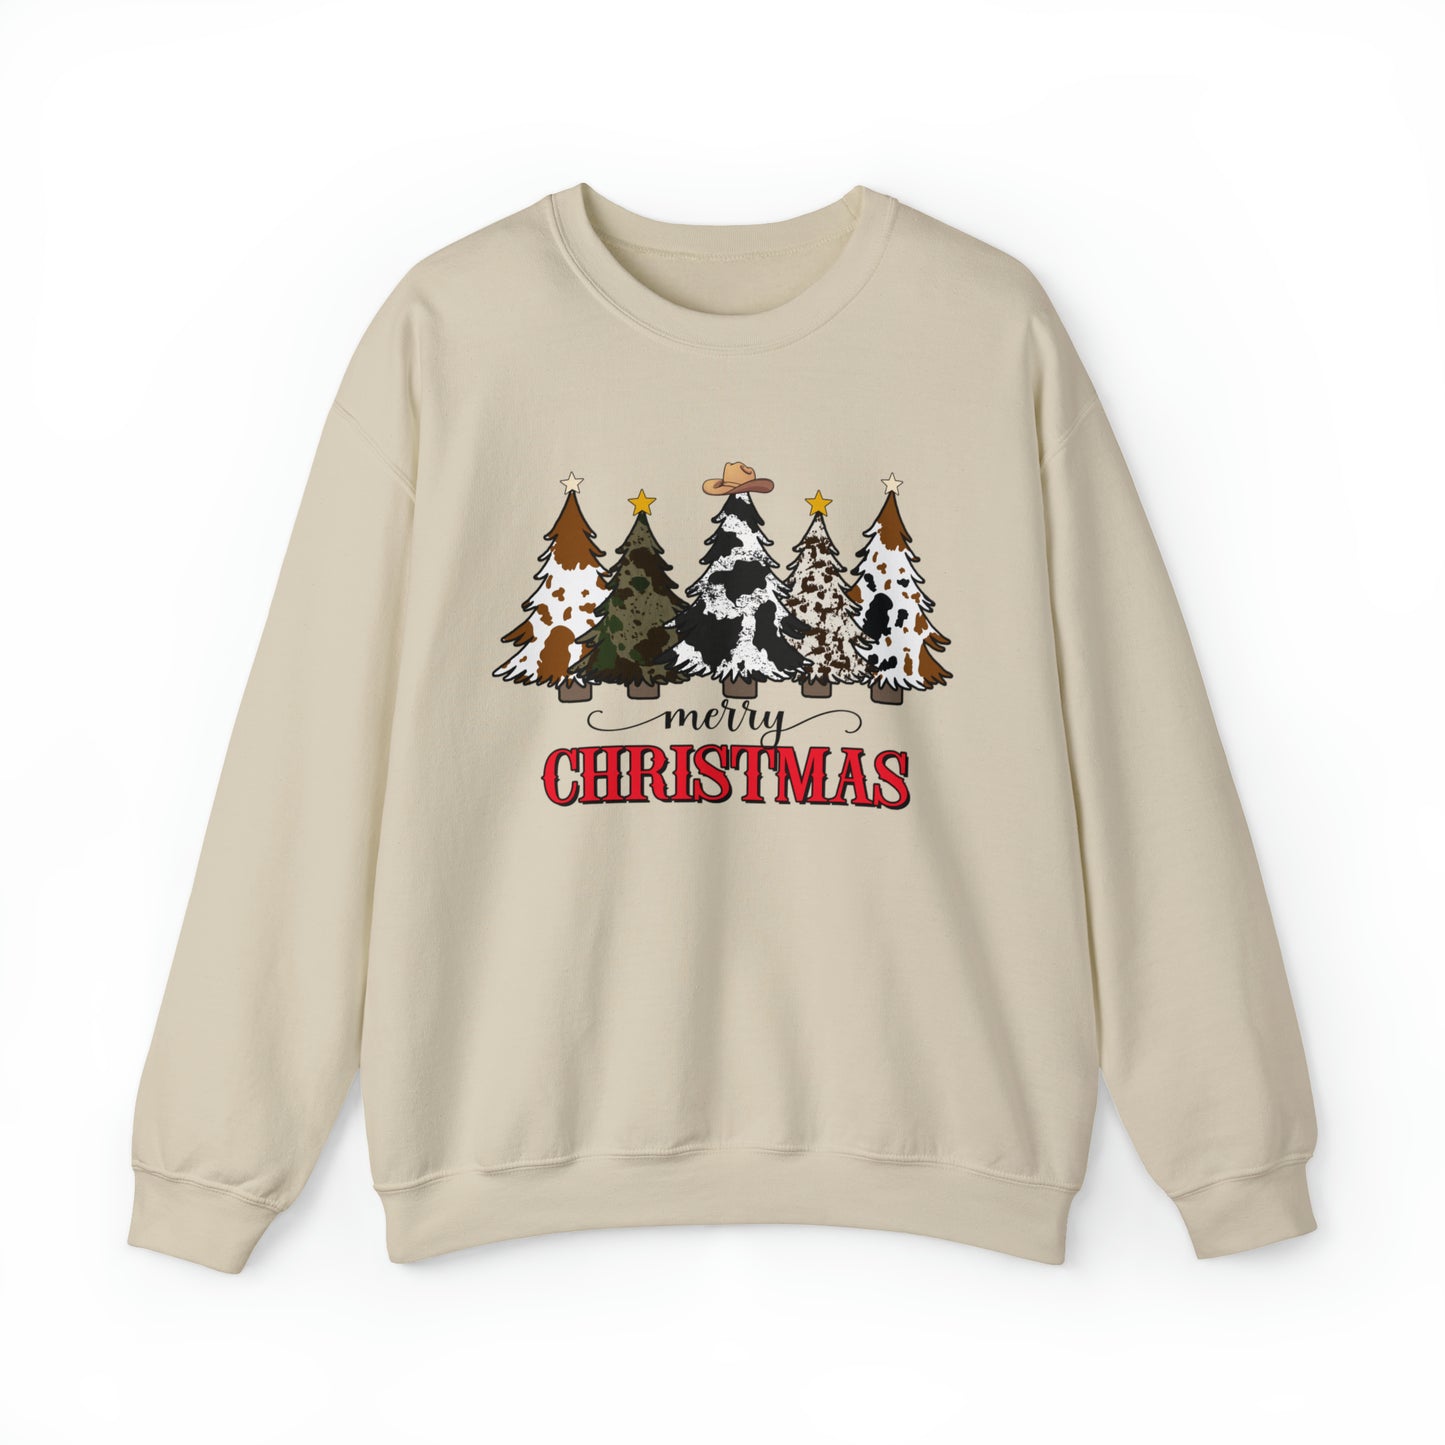 Cowboy and Cowgirl Christmas Sweatshirt, Cute Cowhide Christmas Tree Sweatshirt, Western Holiday Cozy Sweater, Christmas Shirt Gift Idea - Teez Closet